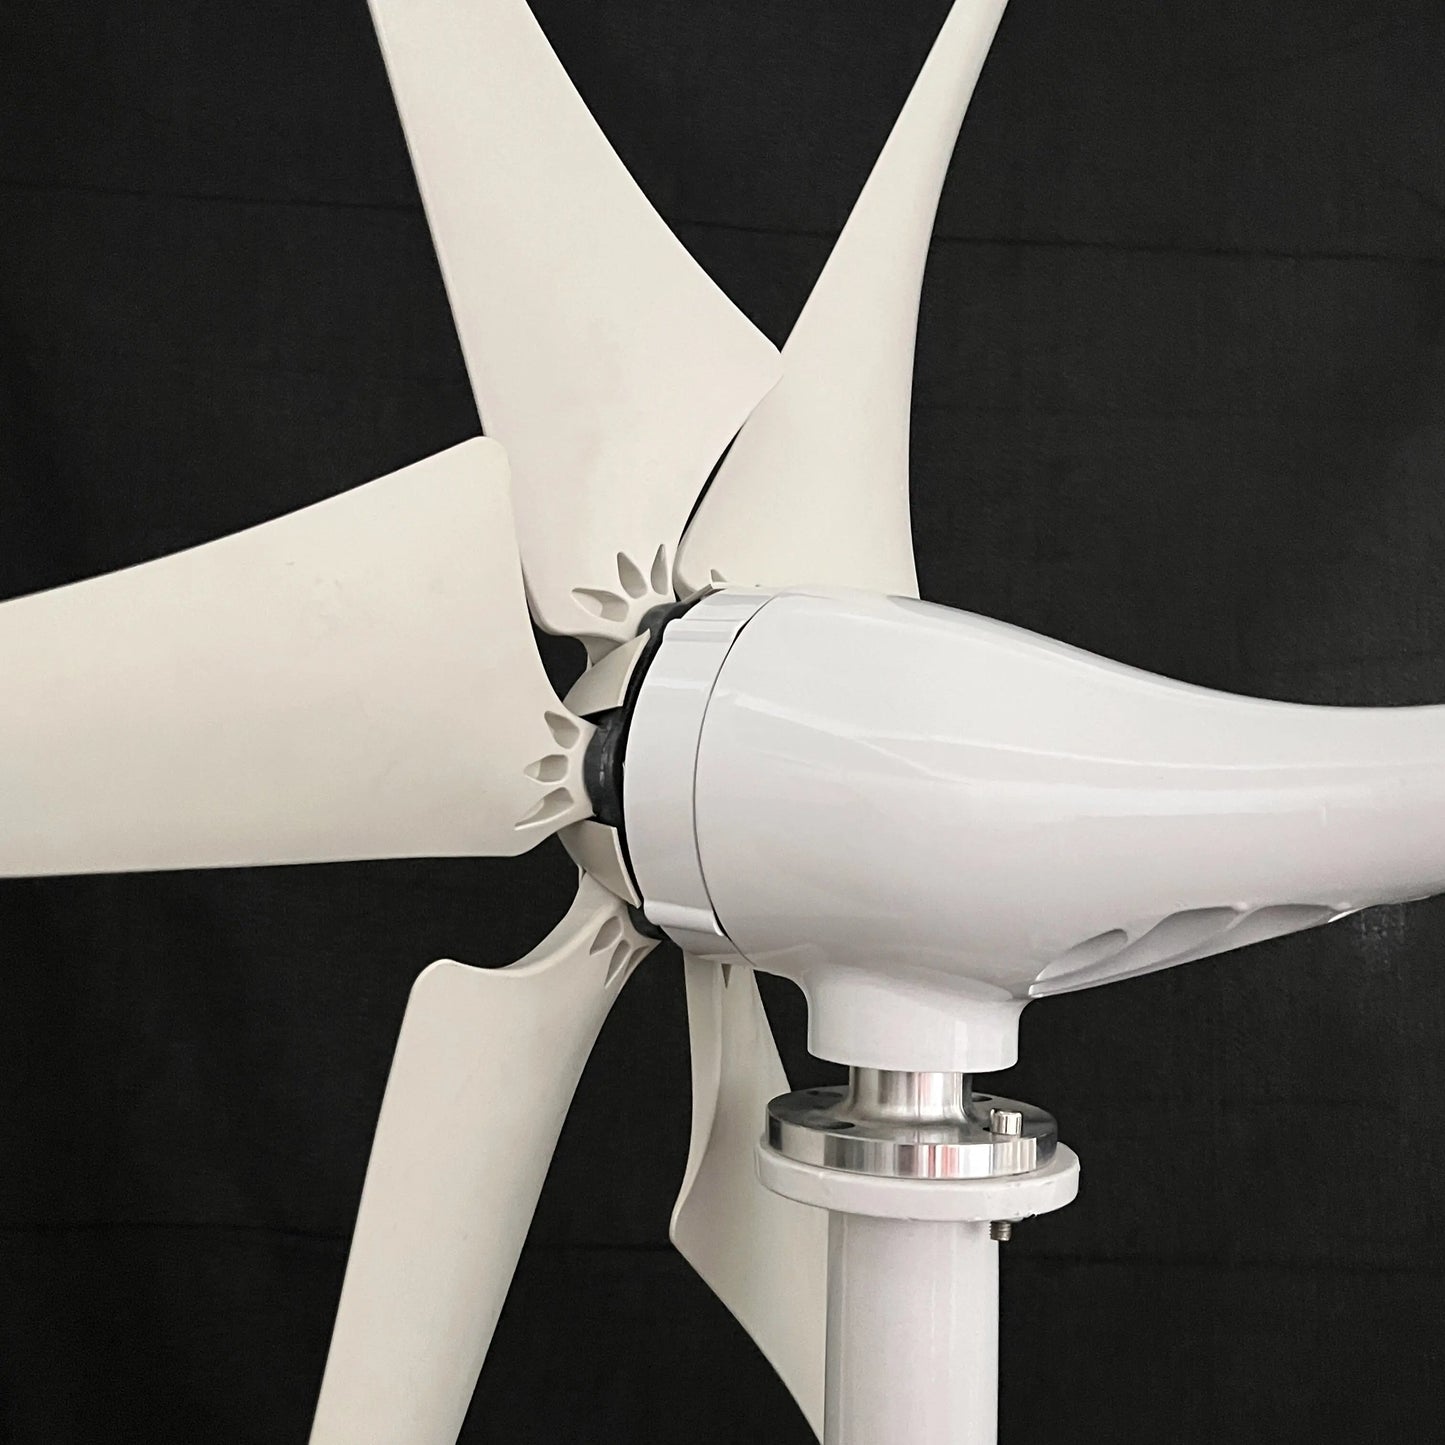 FLTXNY Horizontal Wind Turbine Generator 600W 800W 1000W 3 Blades New Energy 12v 24v 48v For Home Street Lamps